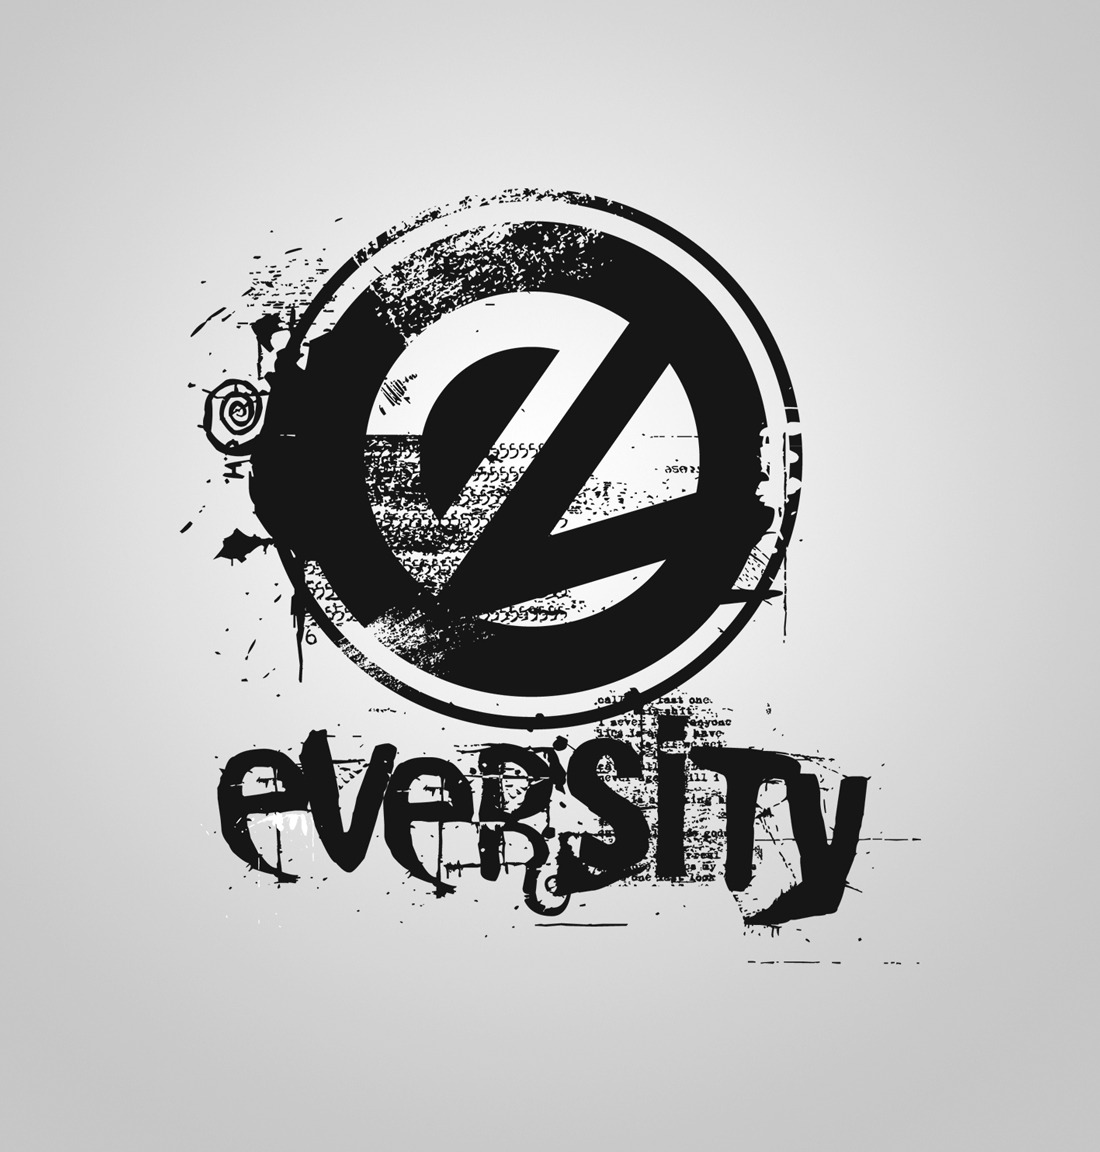 Logo design for local rock band Eversity...